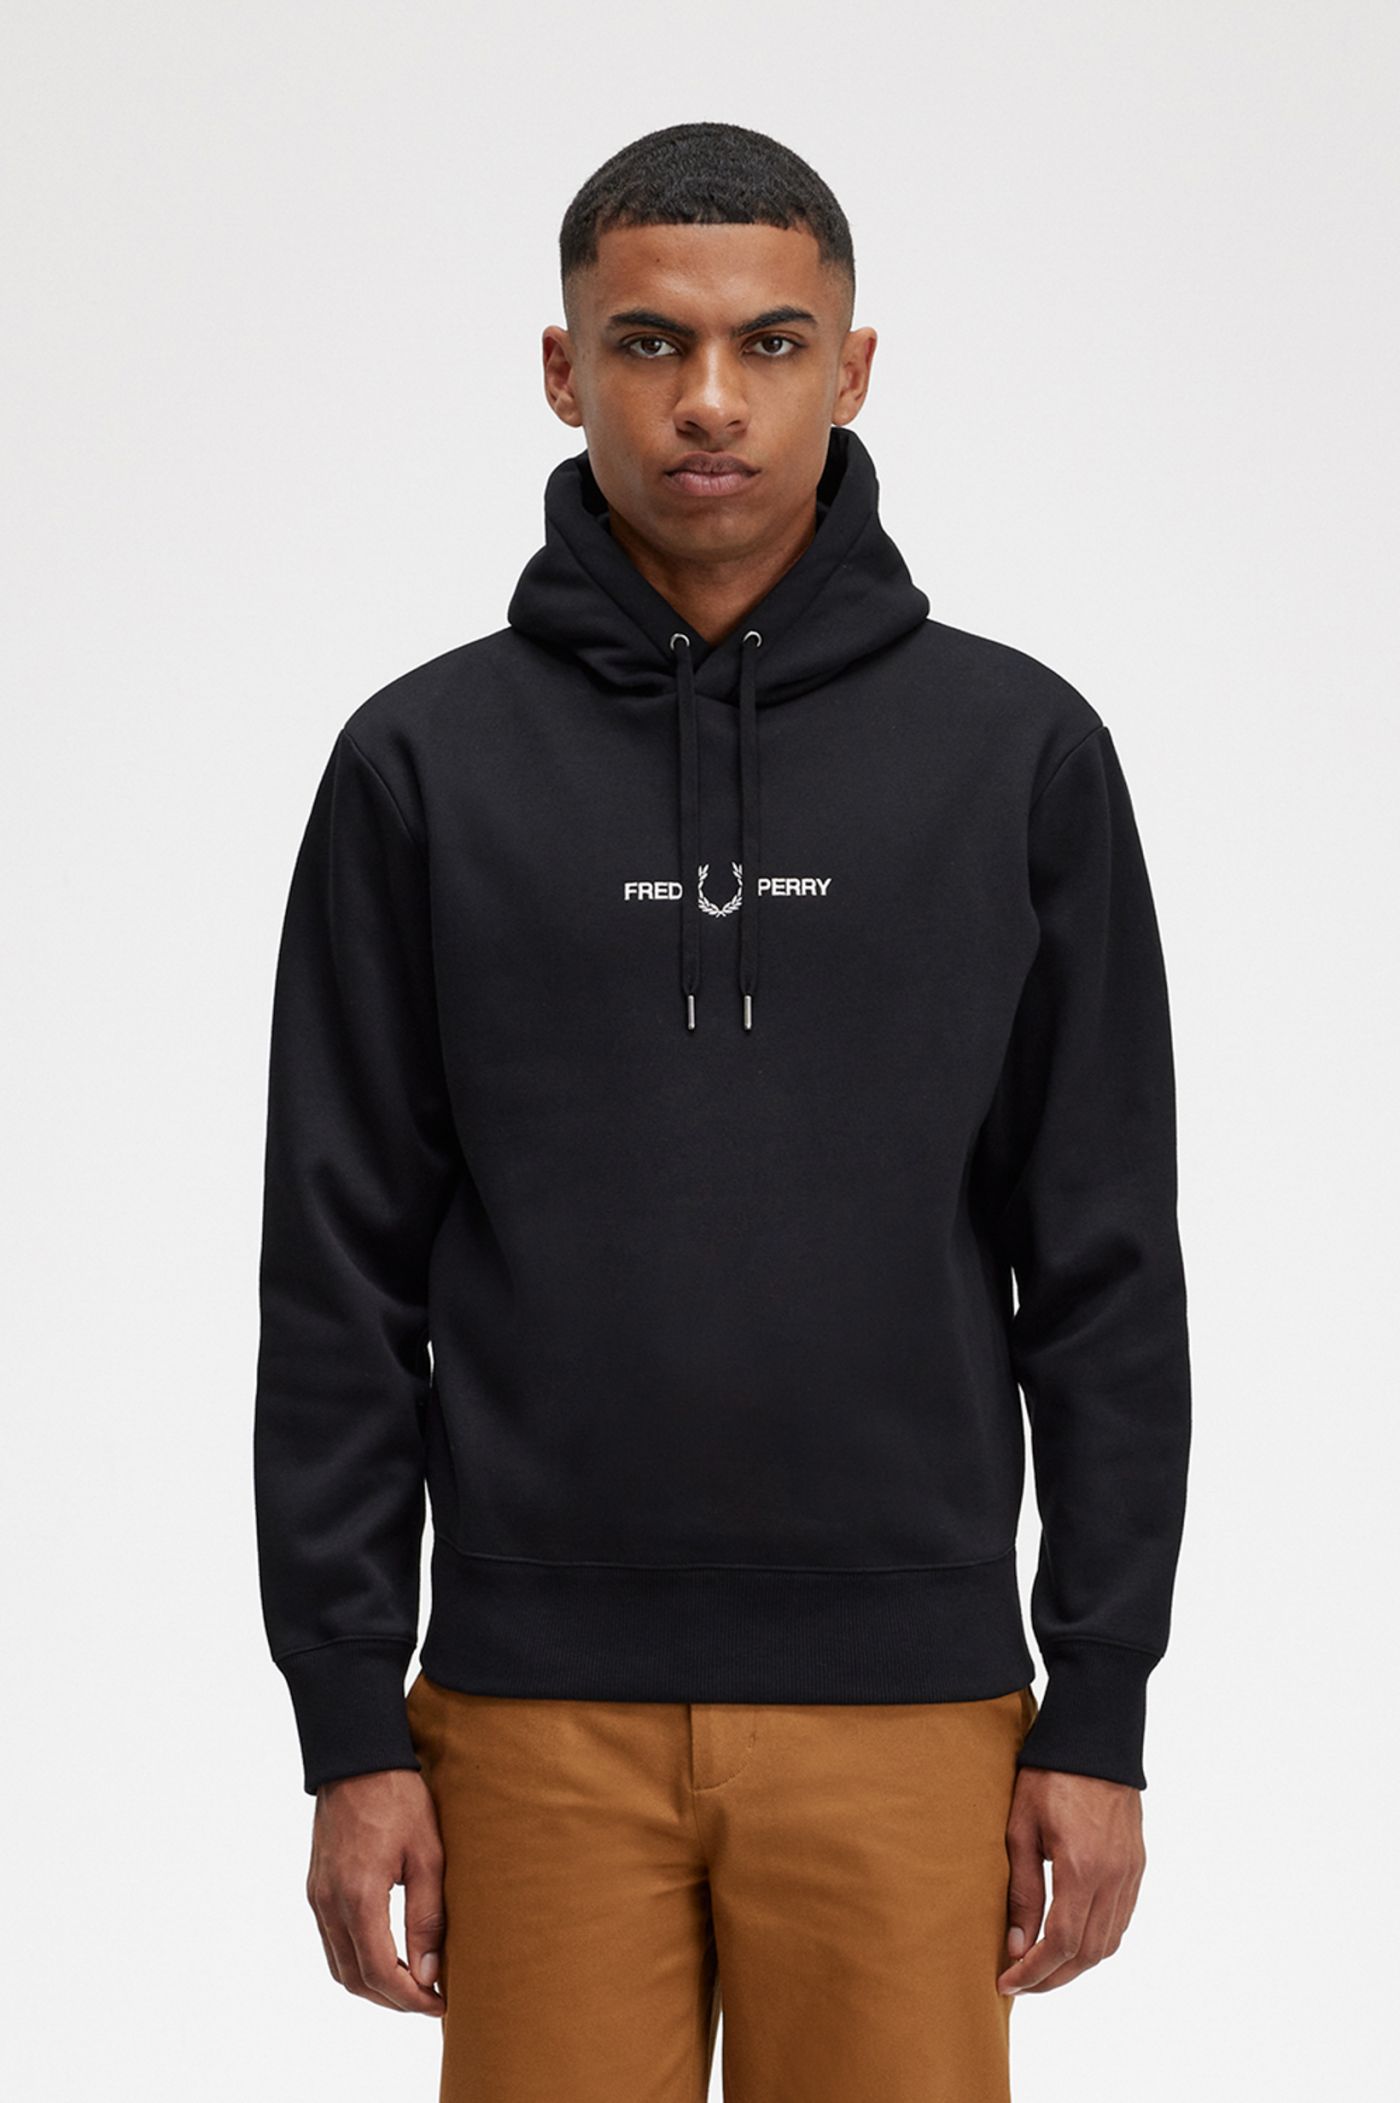 Embroidered Hooded Sweatshirt - Black | Men\'s Sweatshirts |Sports Inspired  Hoodies & Sweatshirts | Fred Perry US